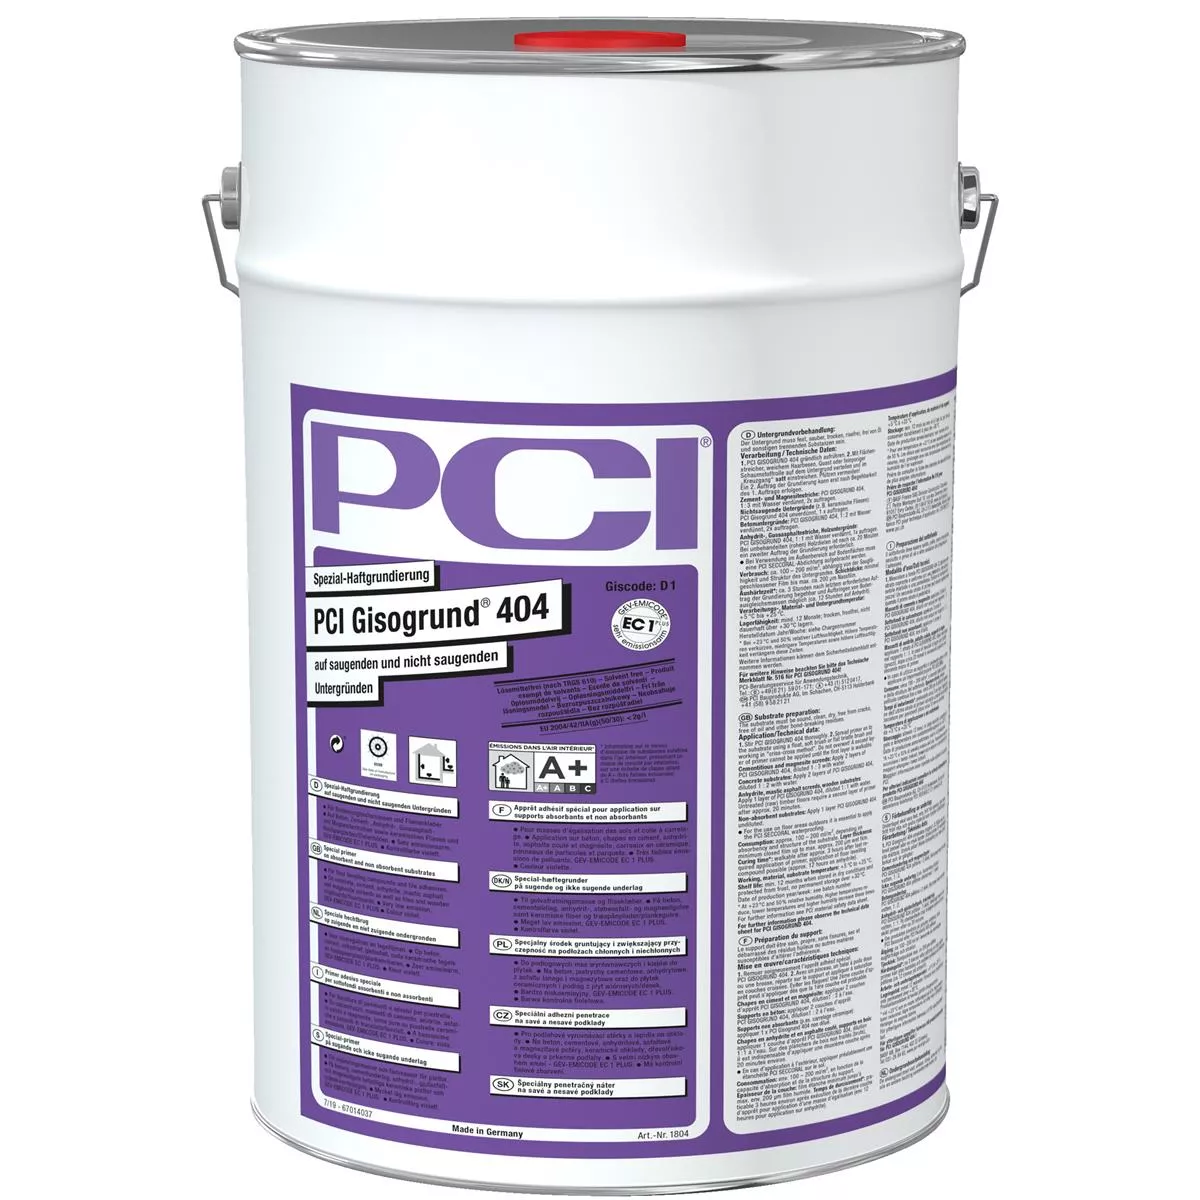 PCI Gisogrund 404 special adhesion primer violet 20 liters